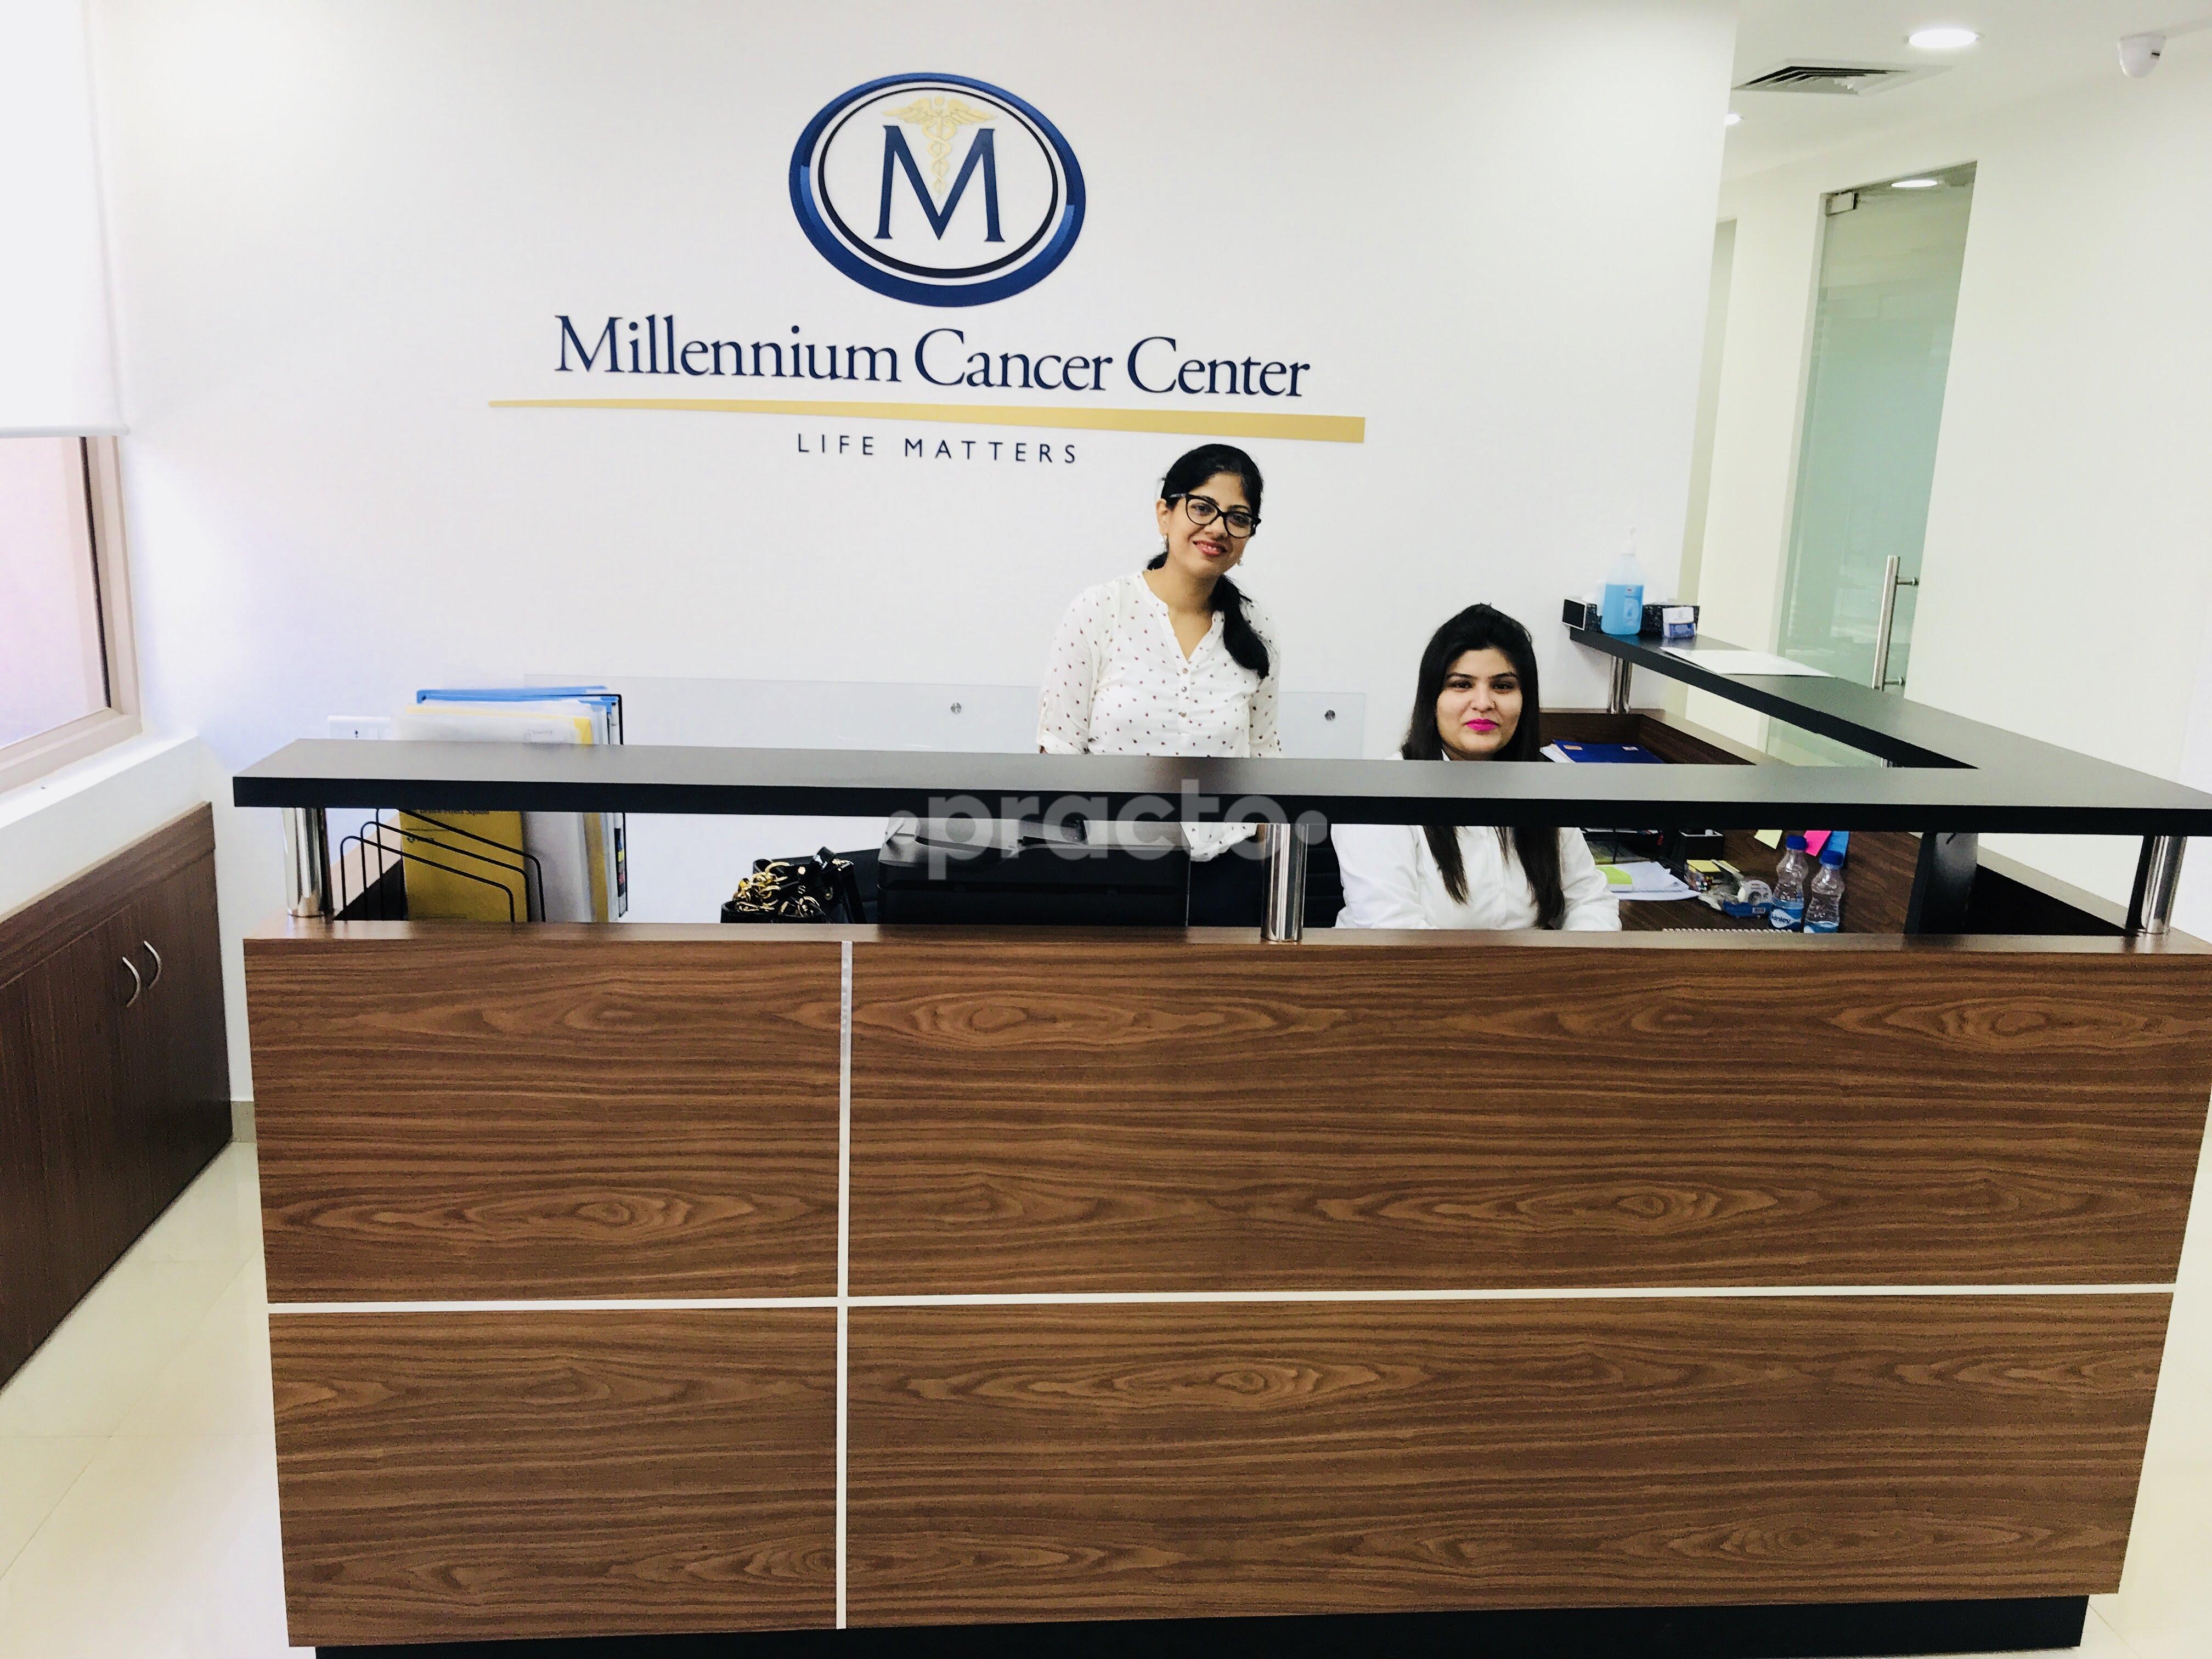 MILLENNIUM CANCER CENTER